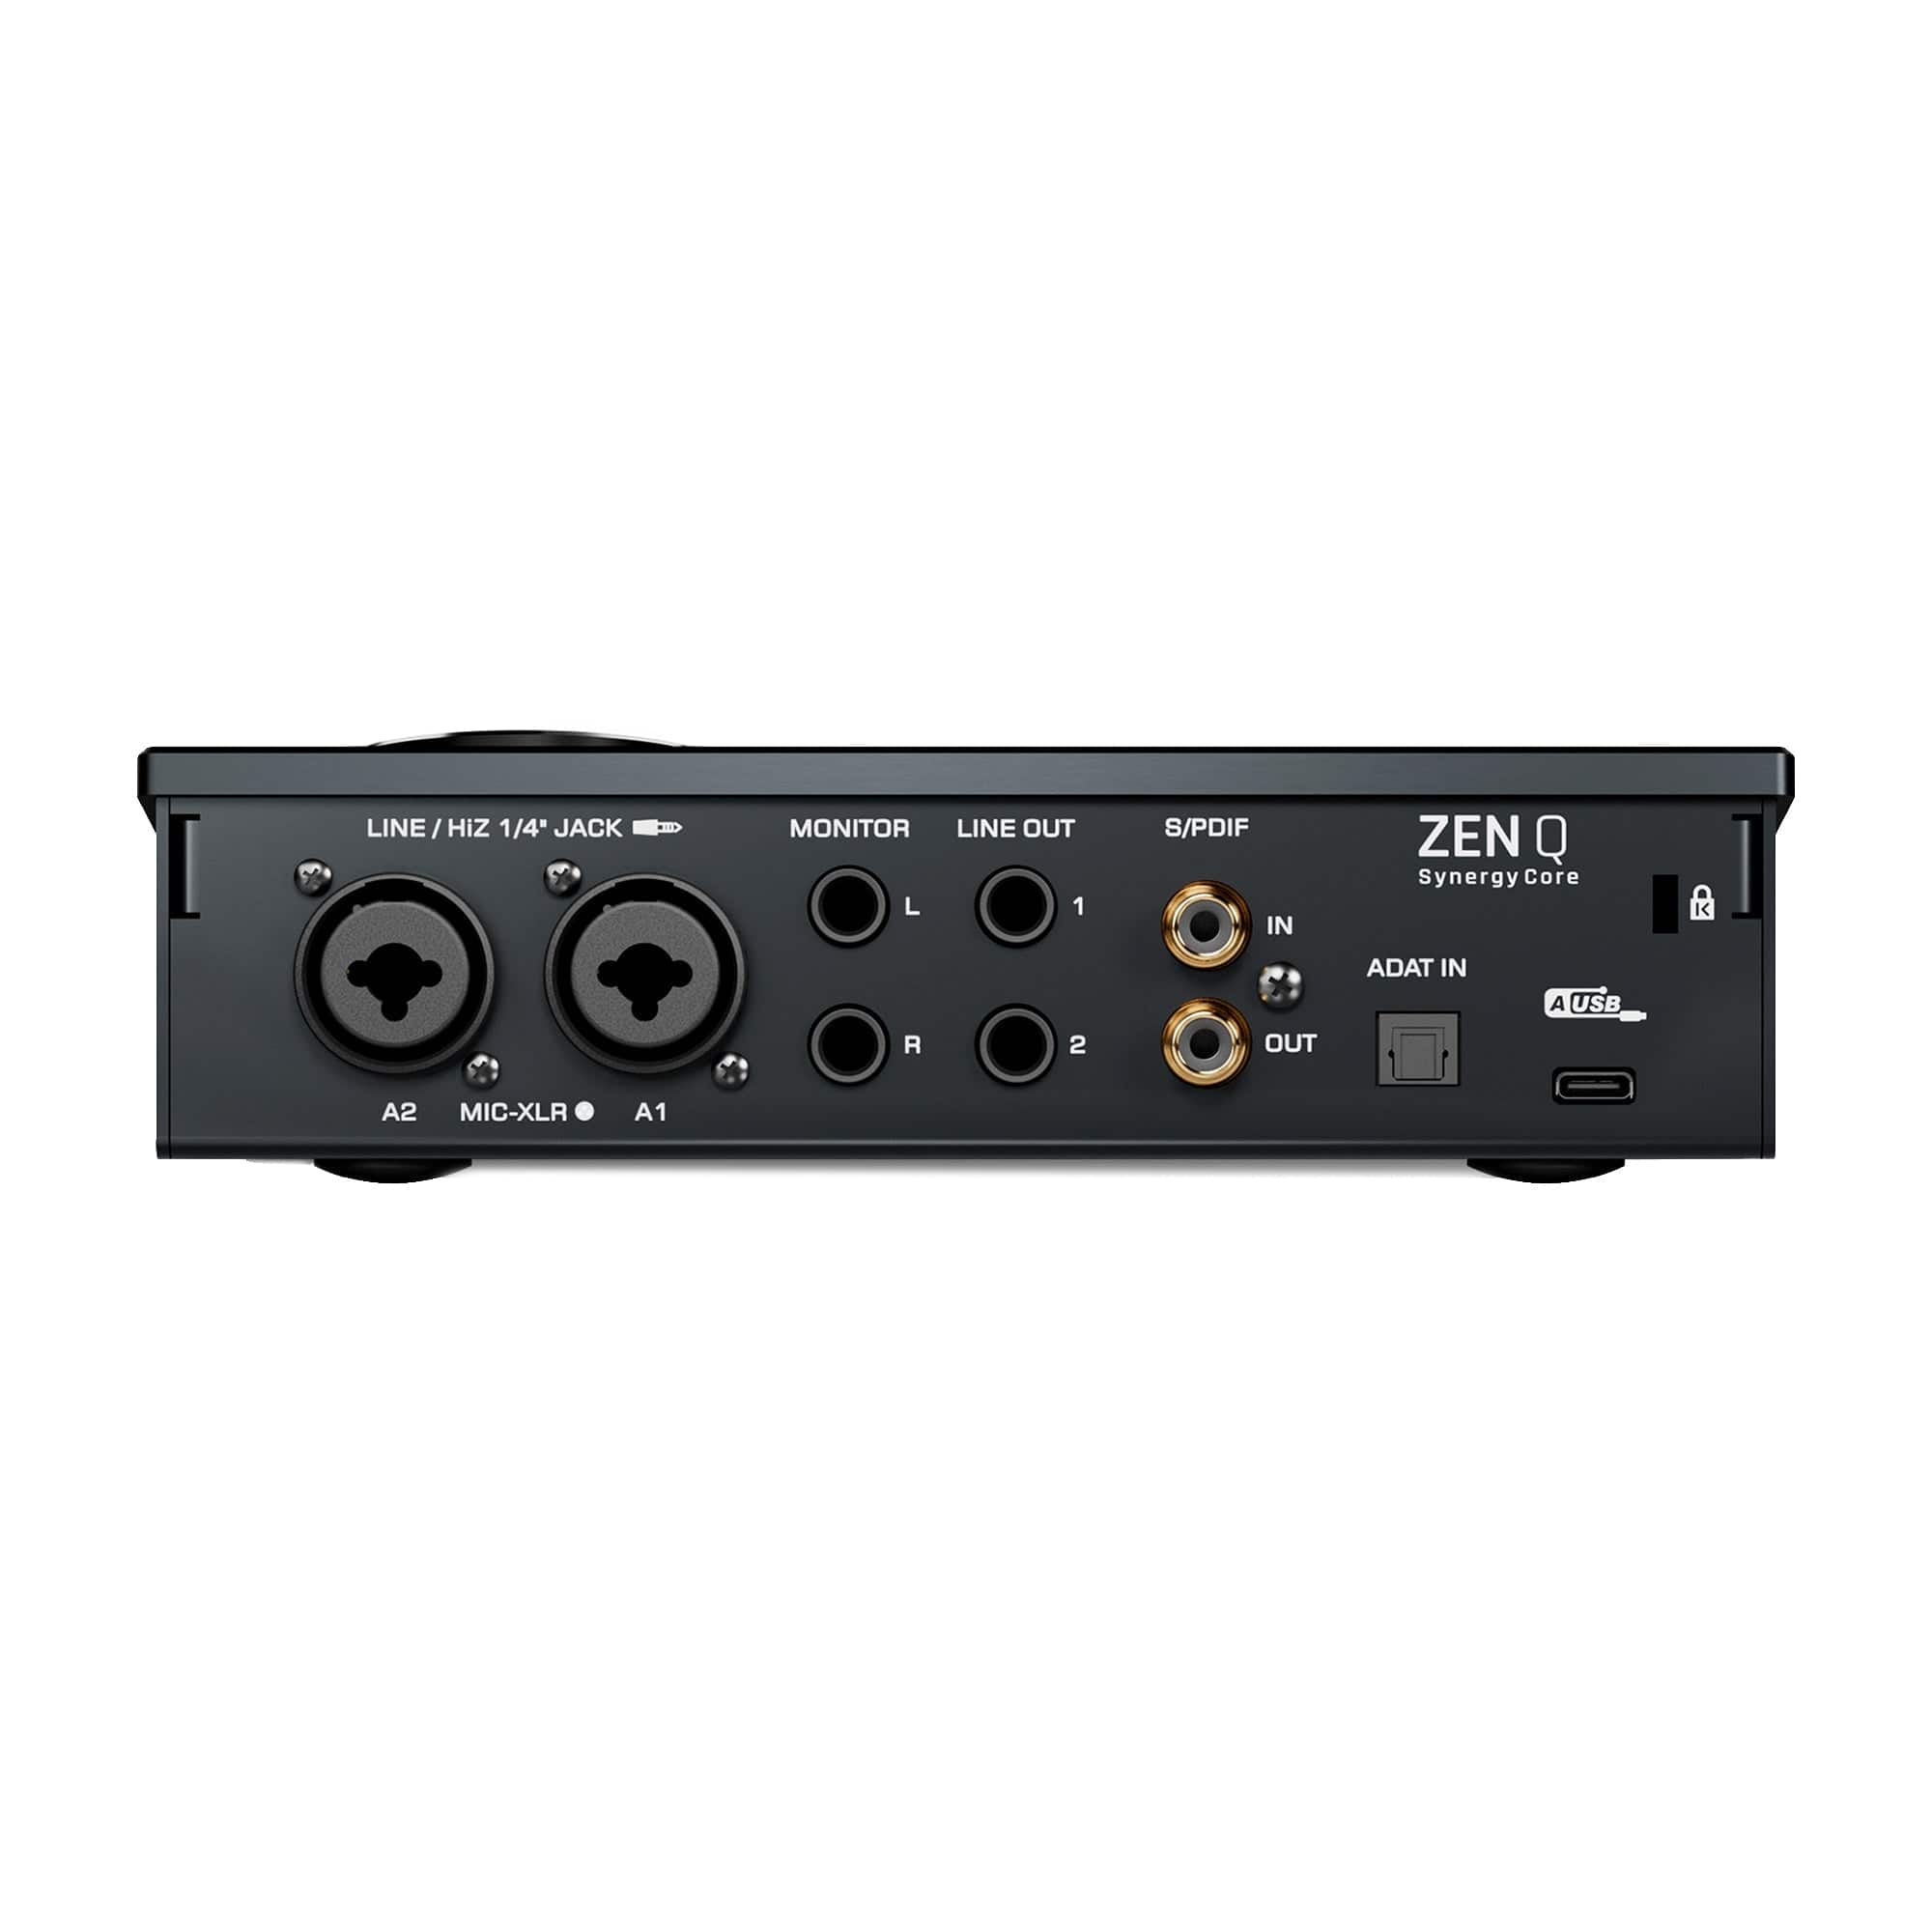 Antelope Audio Zen Q Synergy Core USB Audio Interface Pro Audio / Interfaces